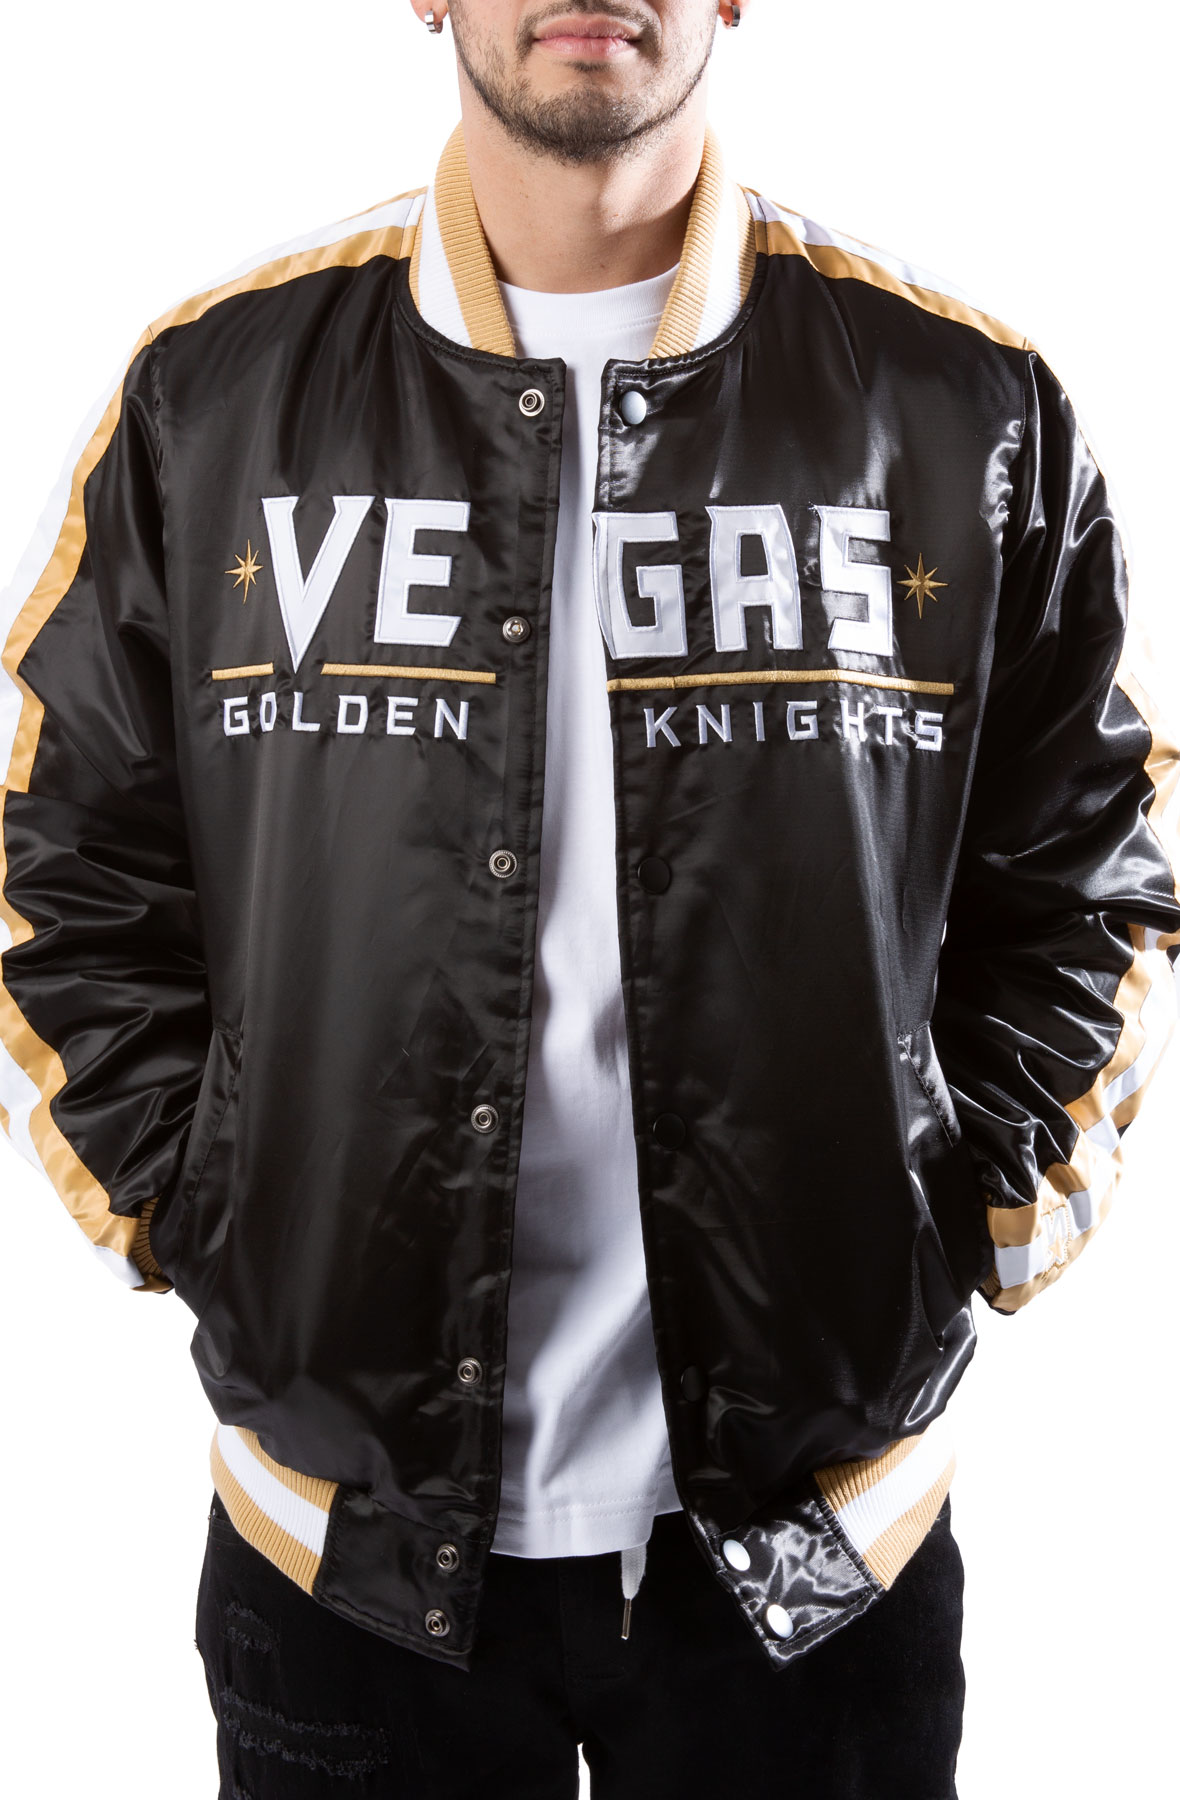 NHL Las Vegas Golden Knights Pullover Sweater Sz Lg NWT 638783100893